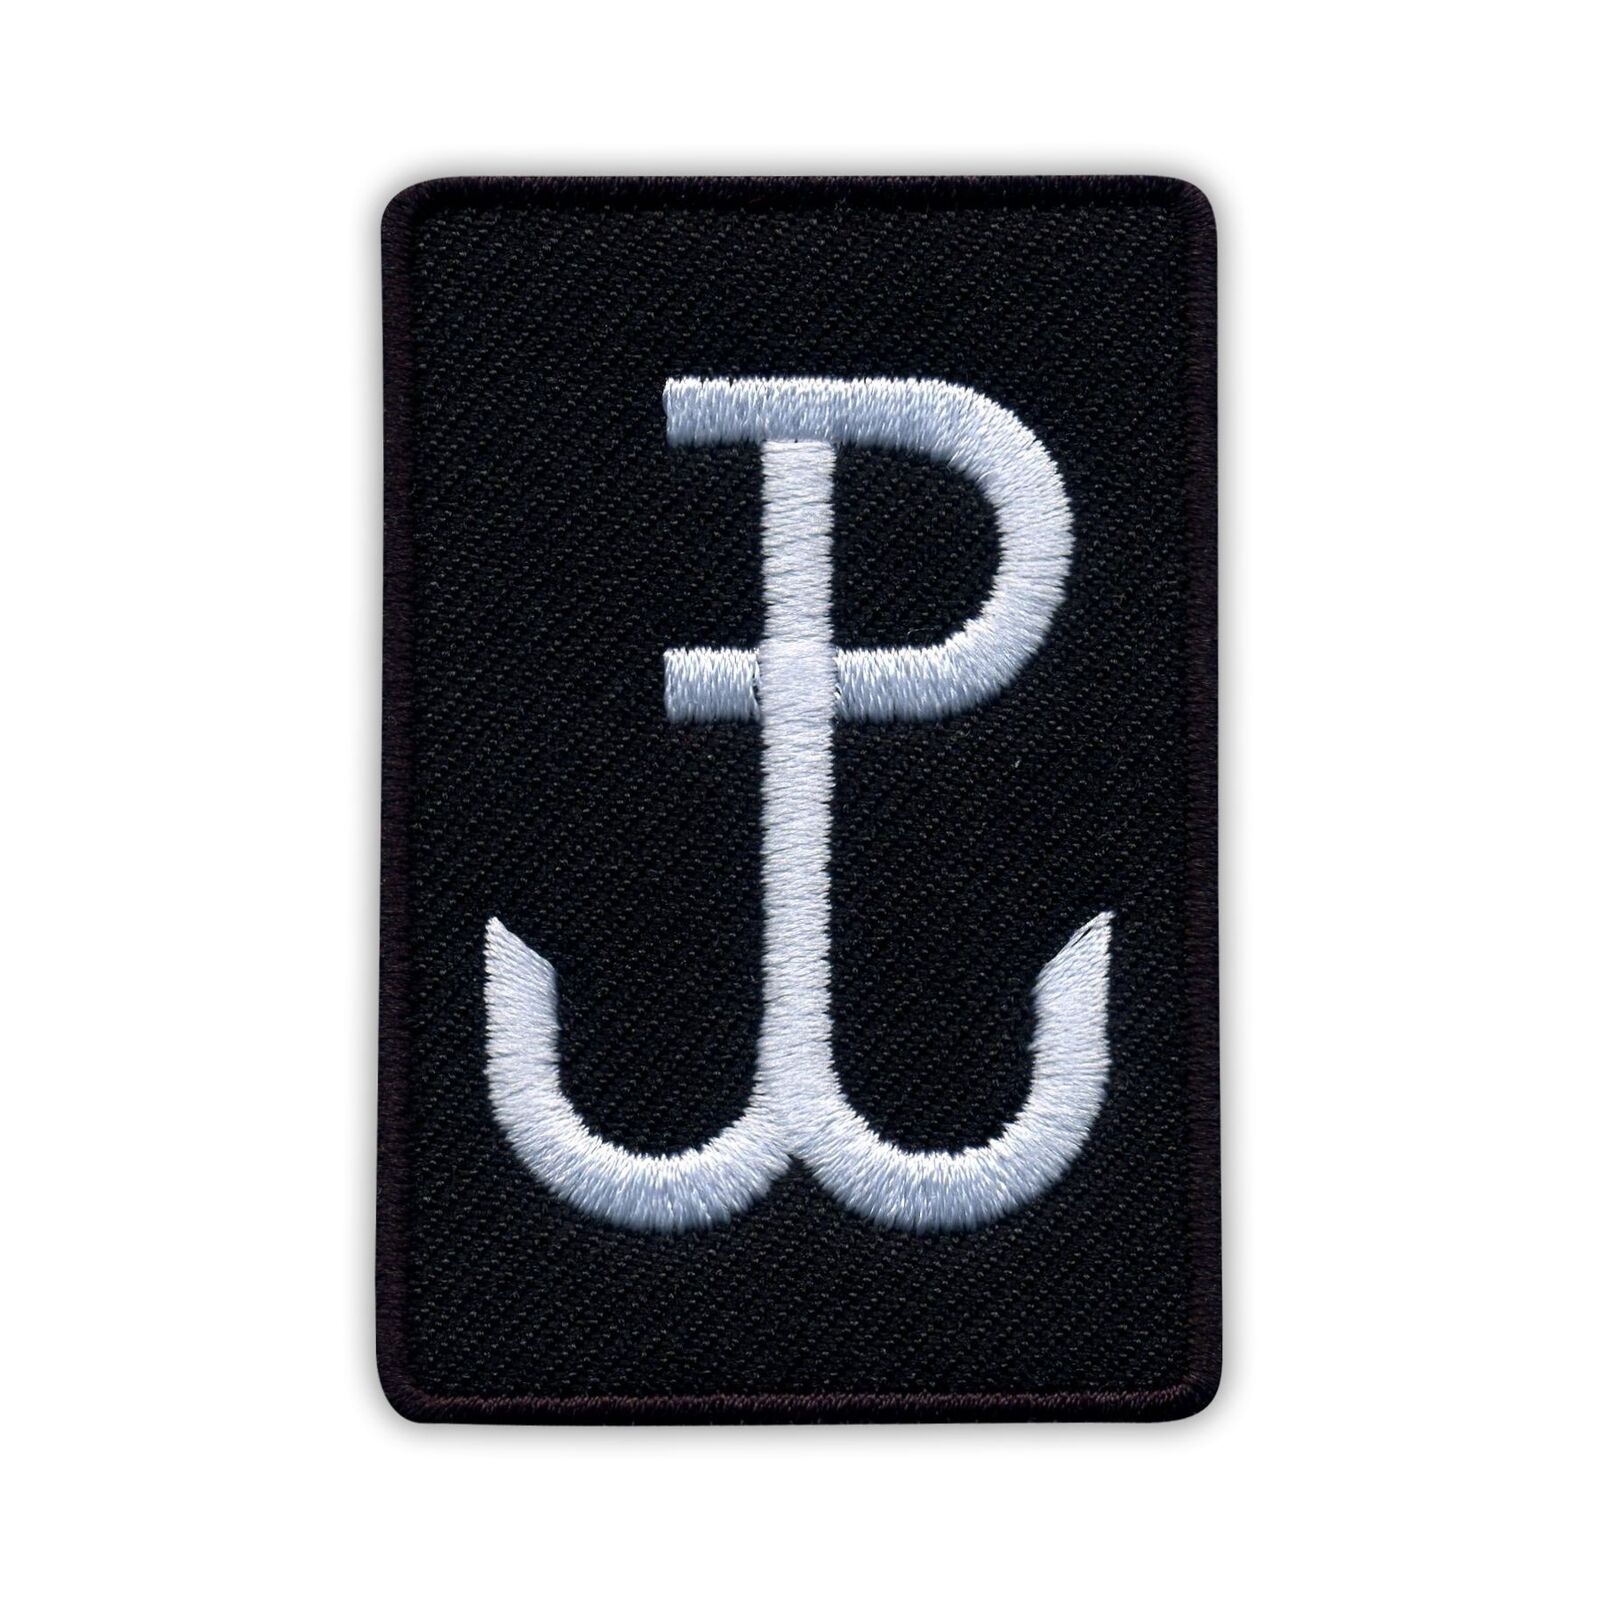 Fighting Poland - Anchor (black) Small /Polska Walczaca - Kotwica Patch/Badge Em